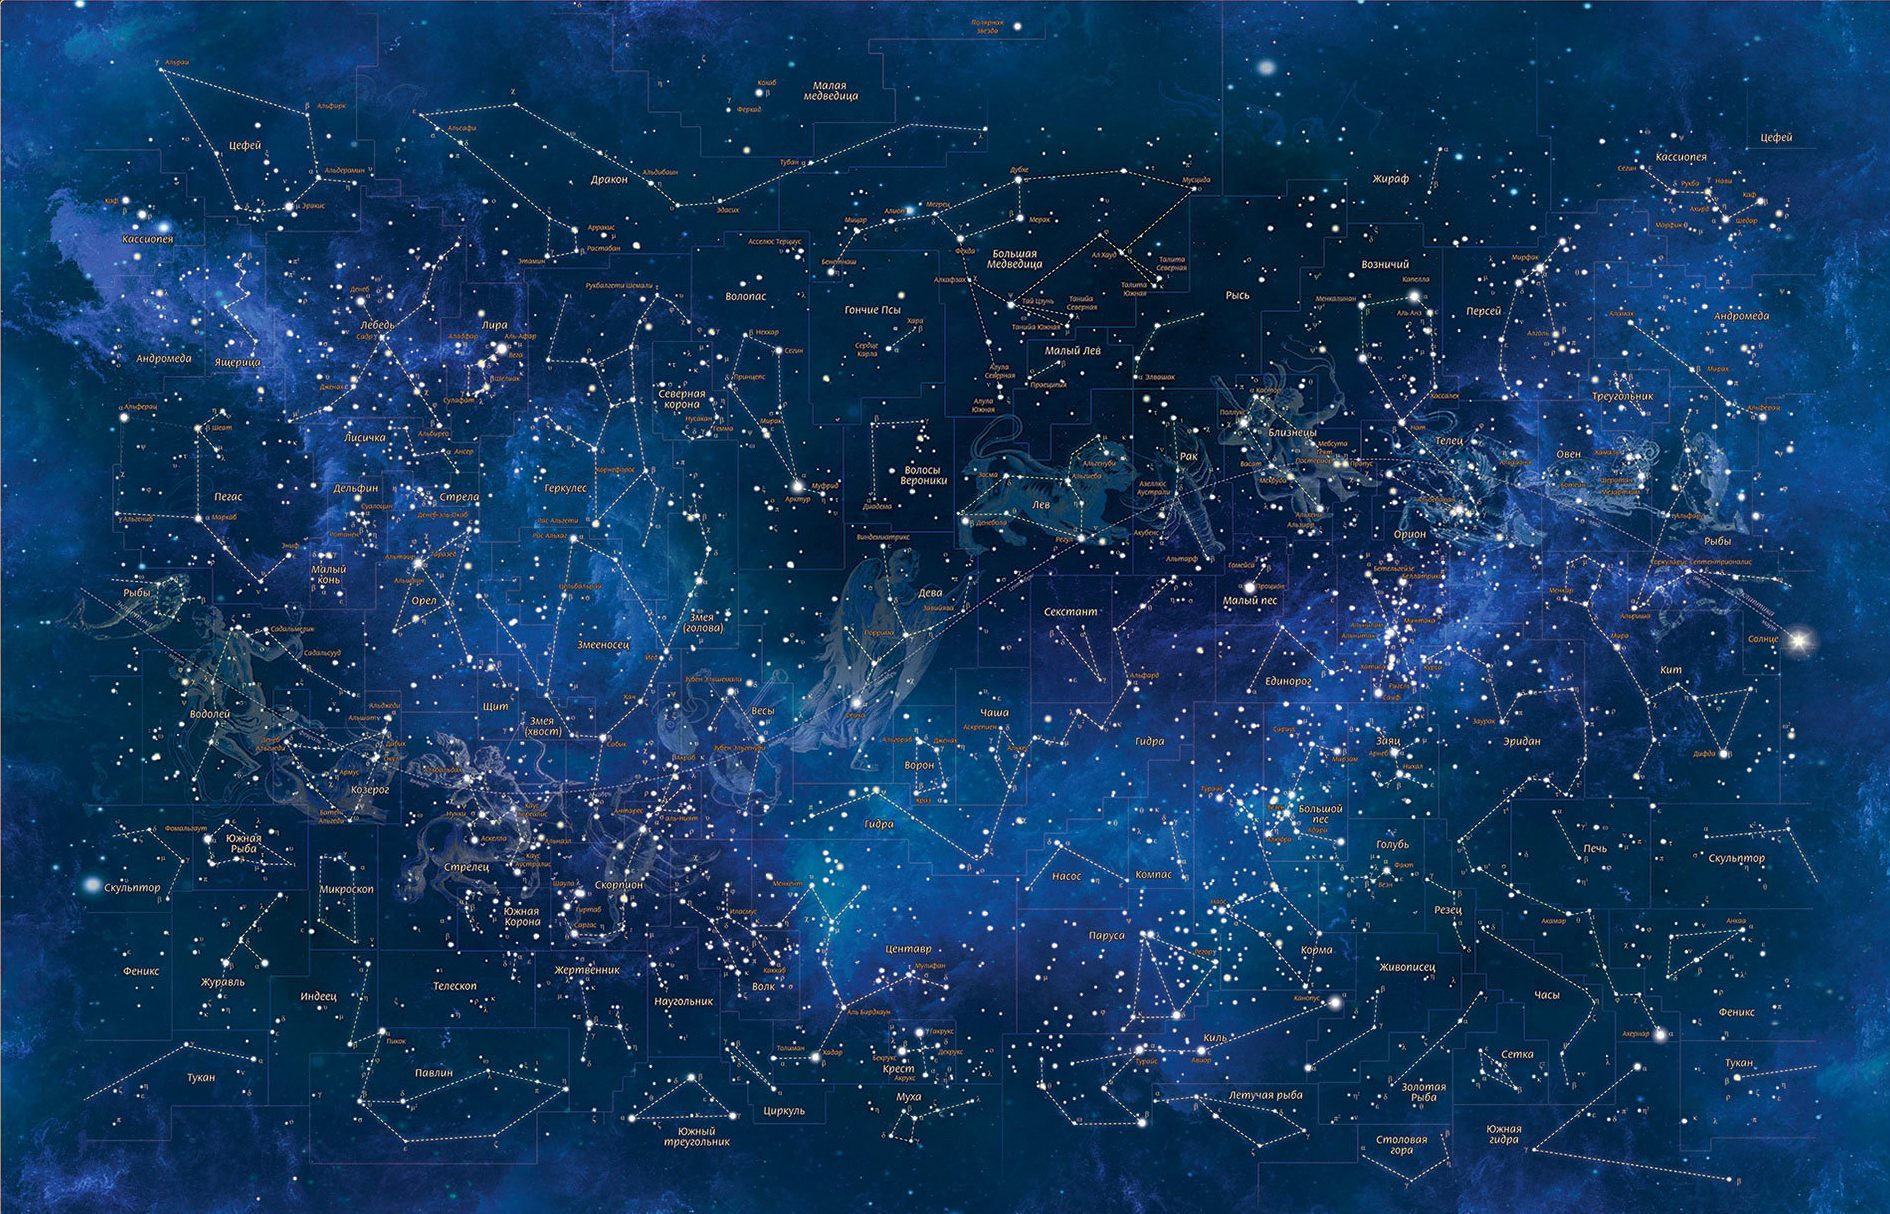 Туры звездное небо. Карта звездного неба. Астрономия созвездия карта звездного неба. Звёздная карта неба. Звездноемнебл созвездия.